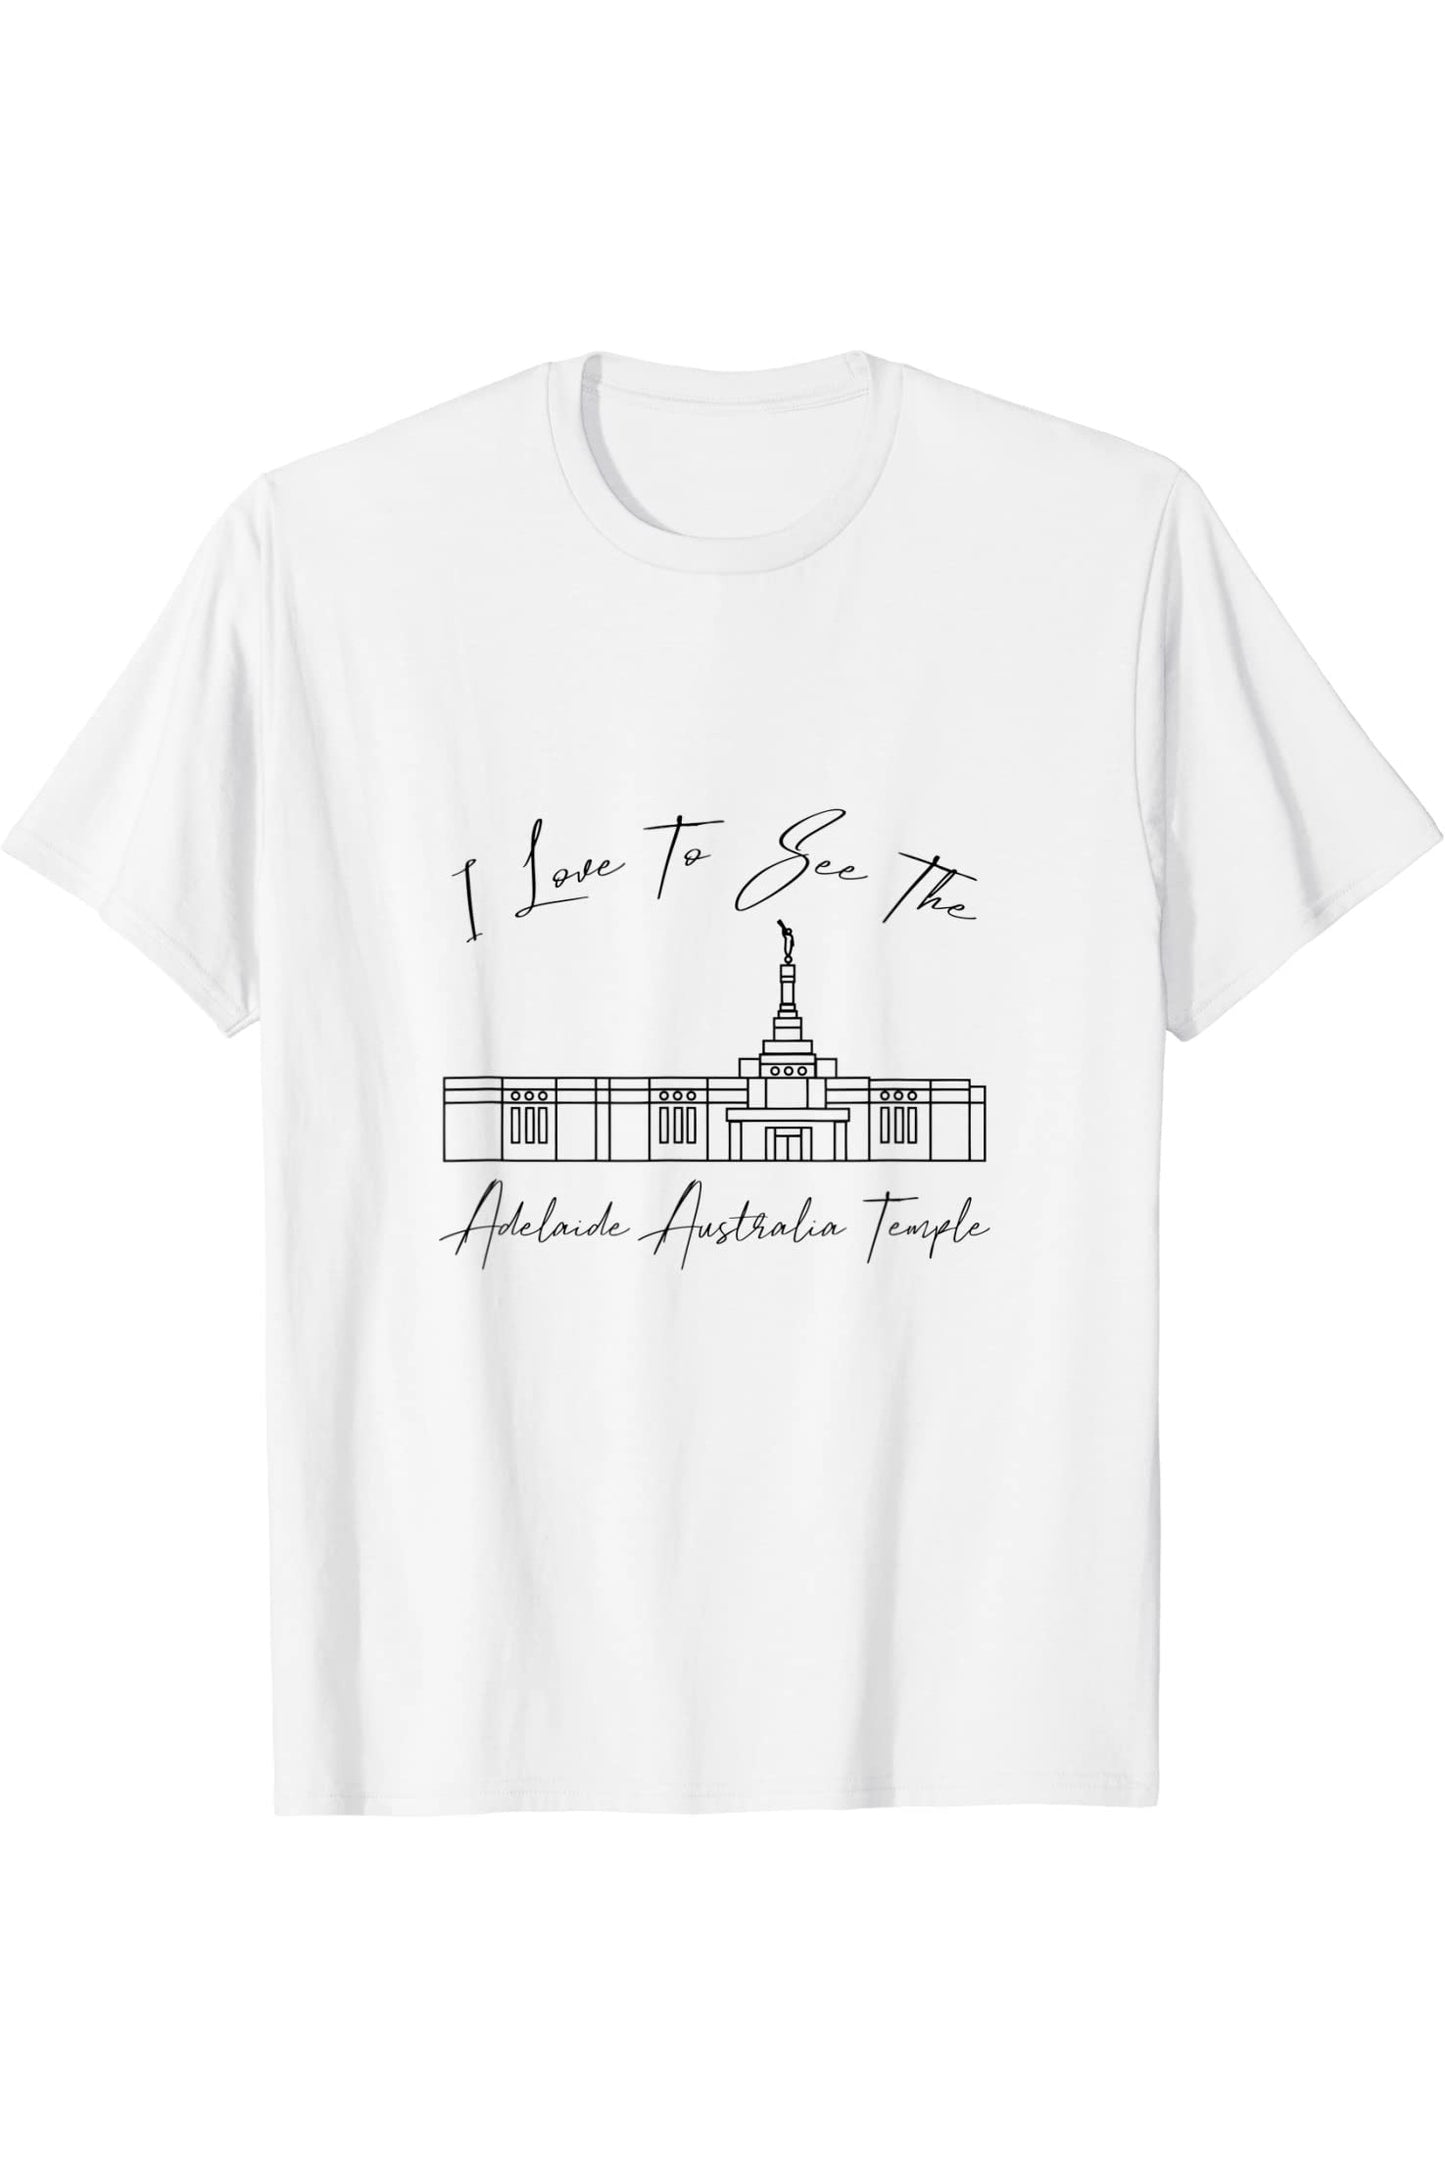 Adelaide Australia Temple T-Shirt - Calligraphy Style (English) US